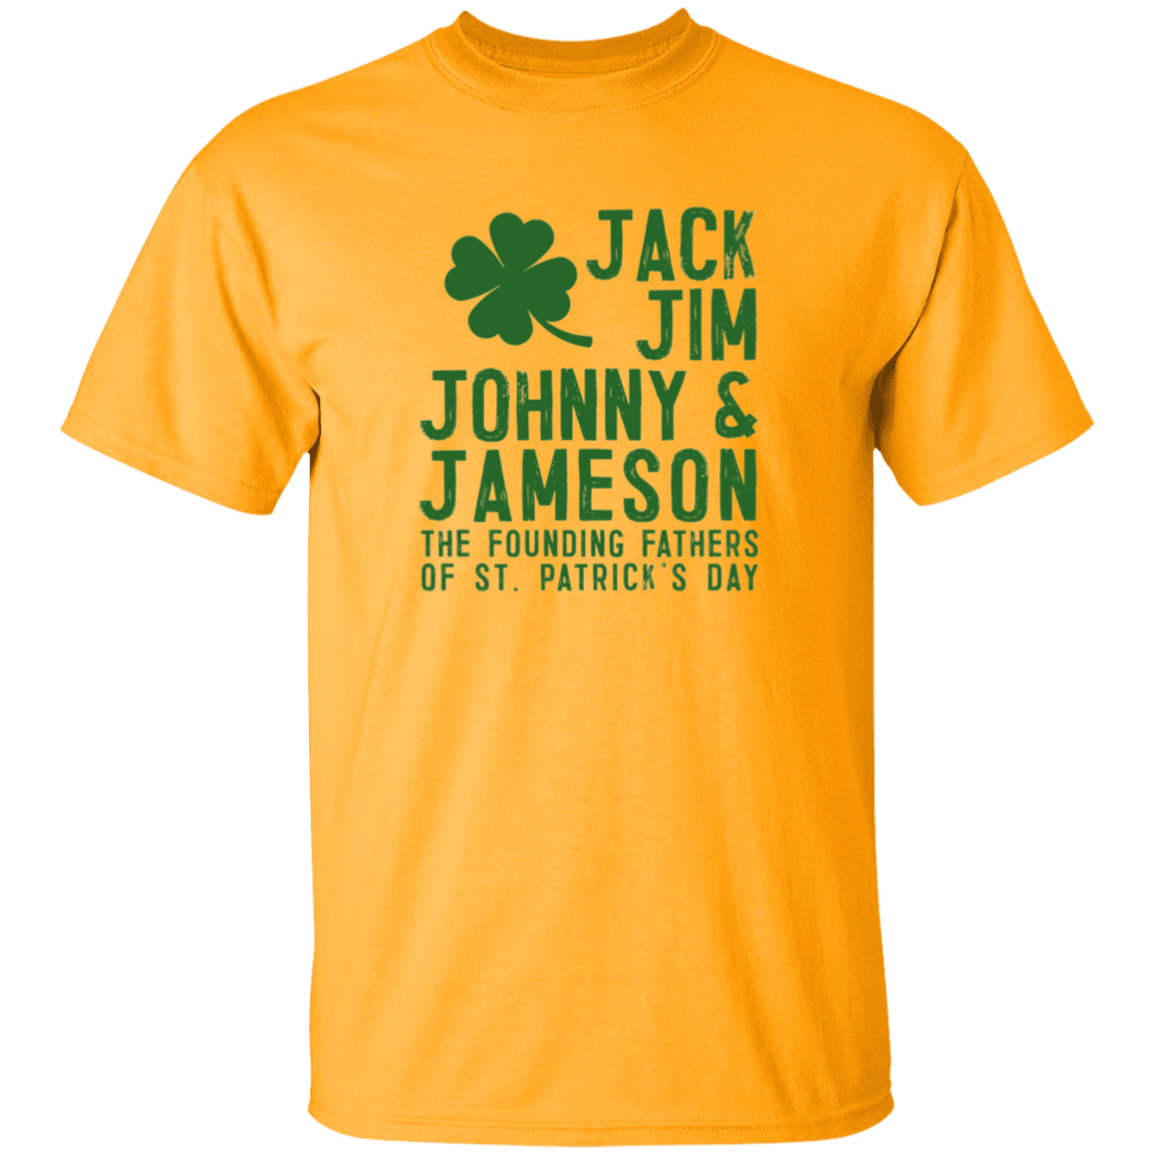 Jack, Jim, Johnny, & Jameson T-Shirt